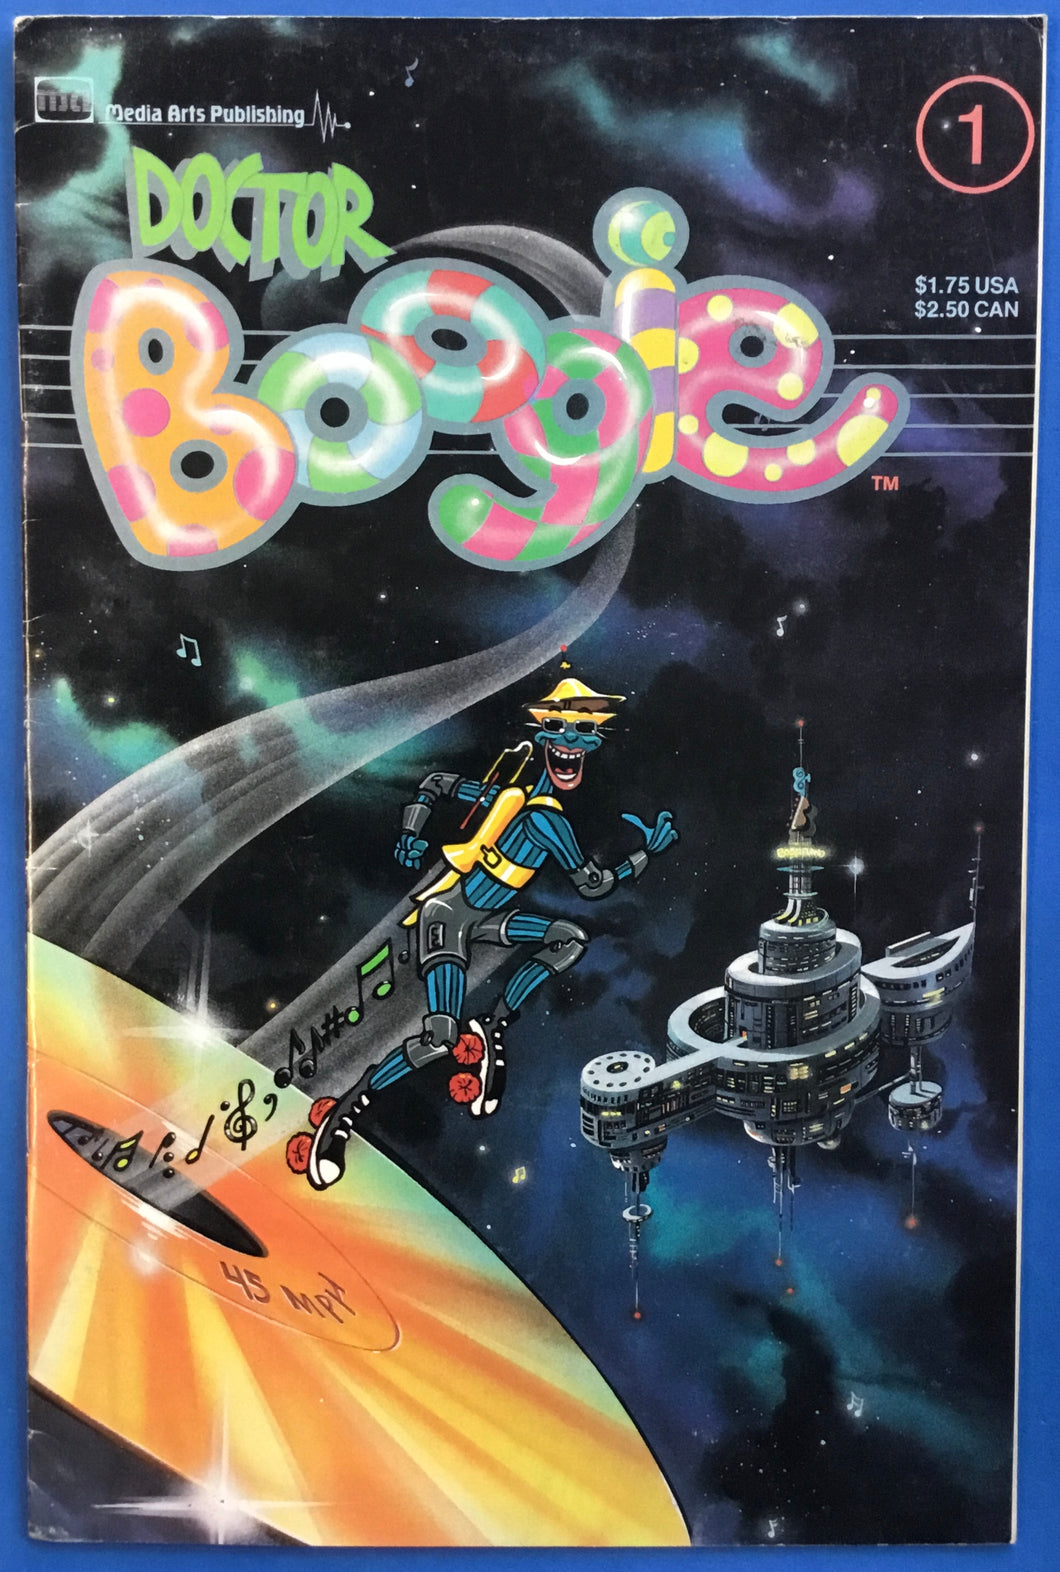 Doctor Boogie No. #1 1987 Media Arts Publishing